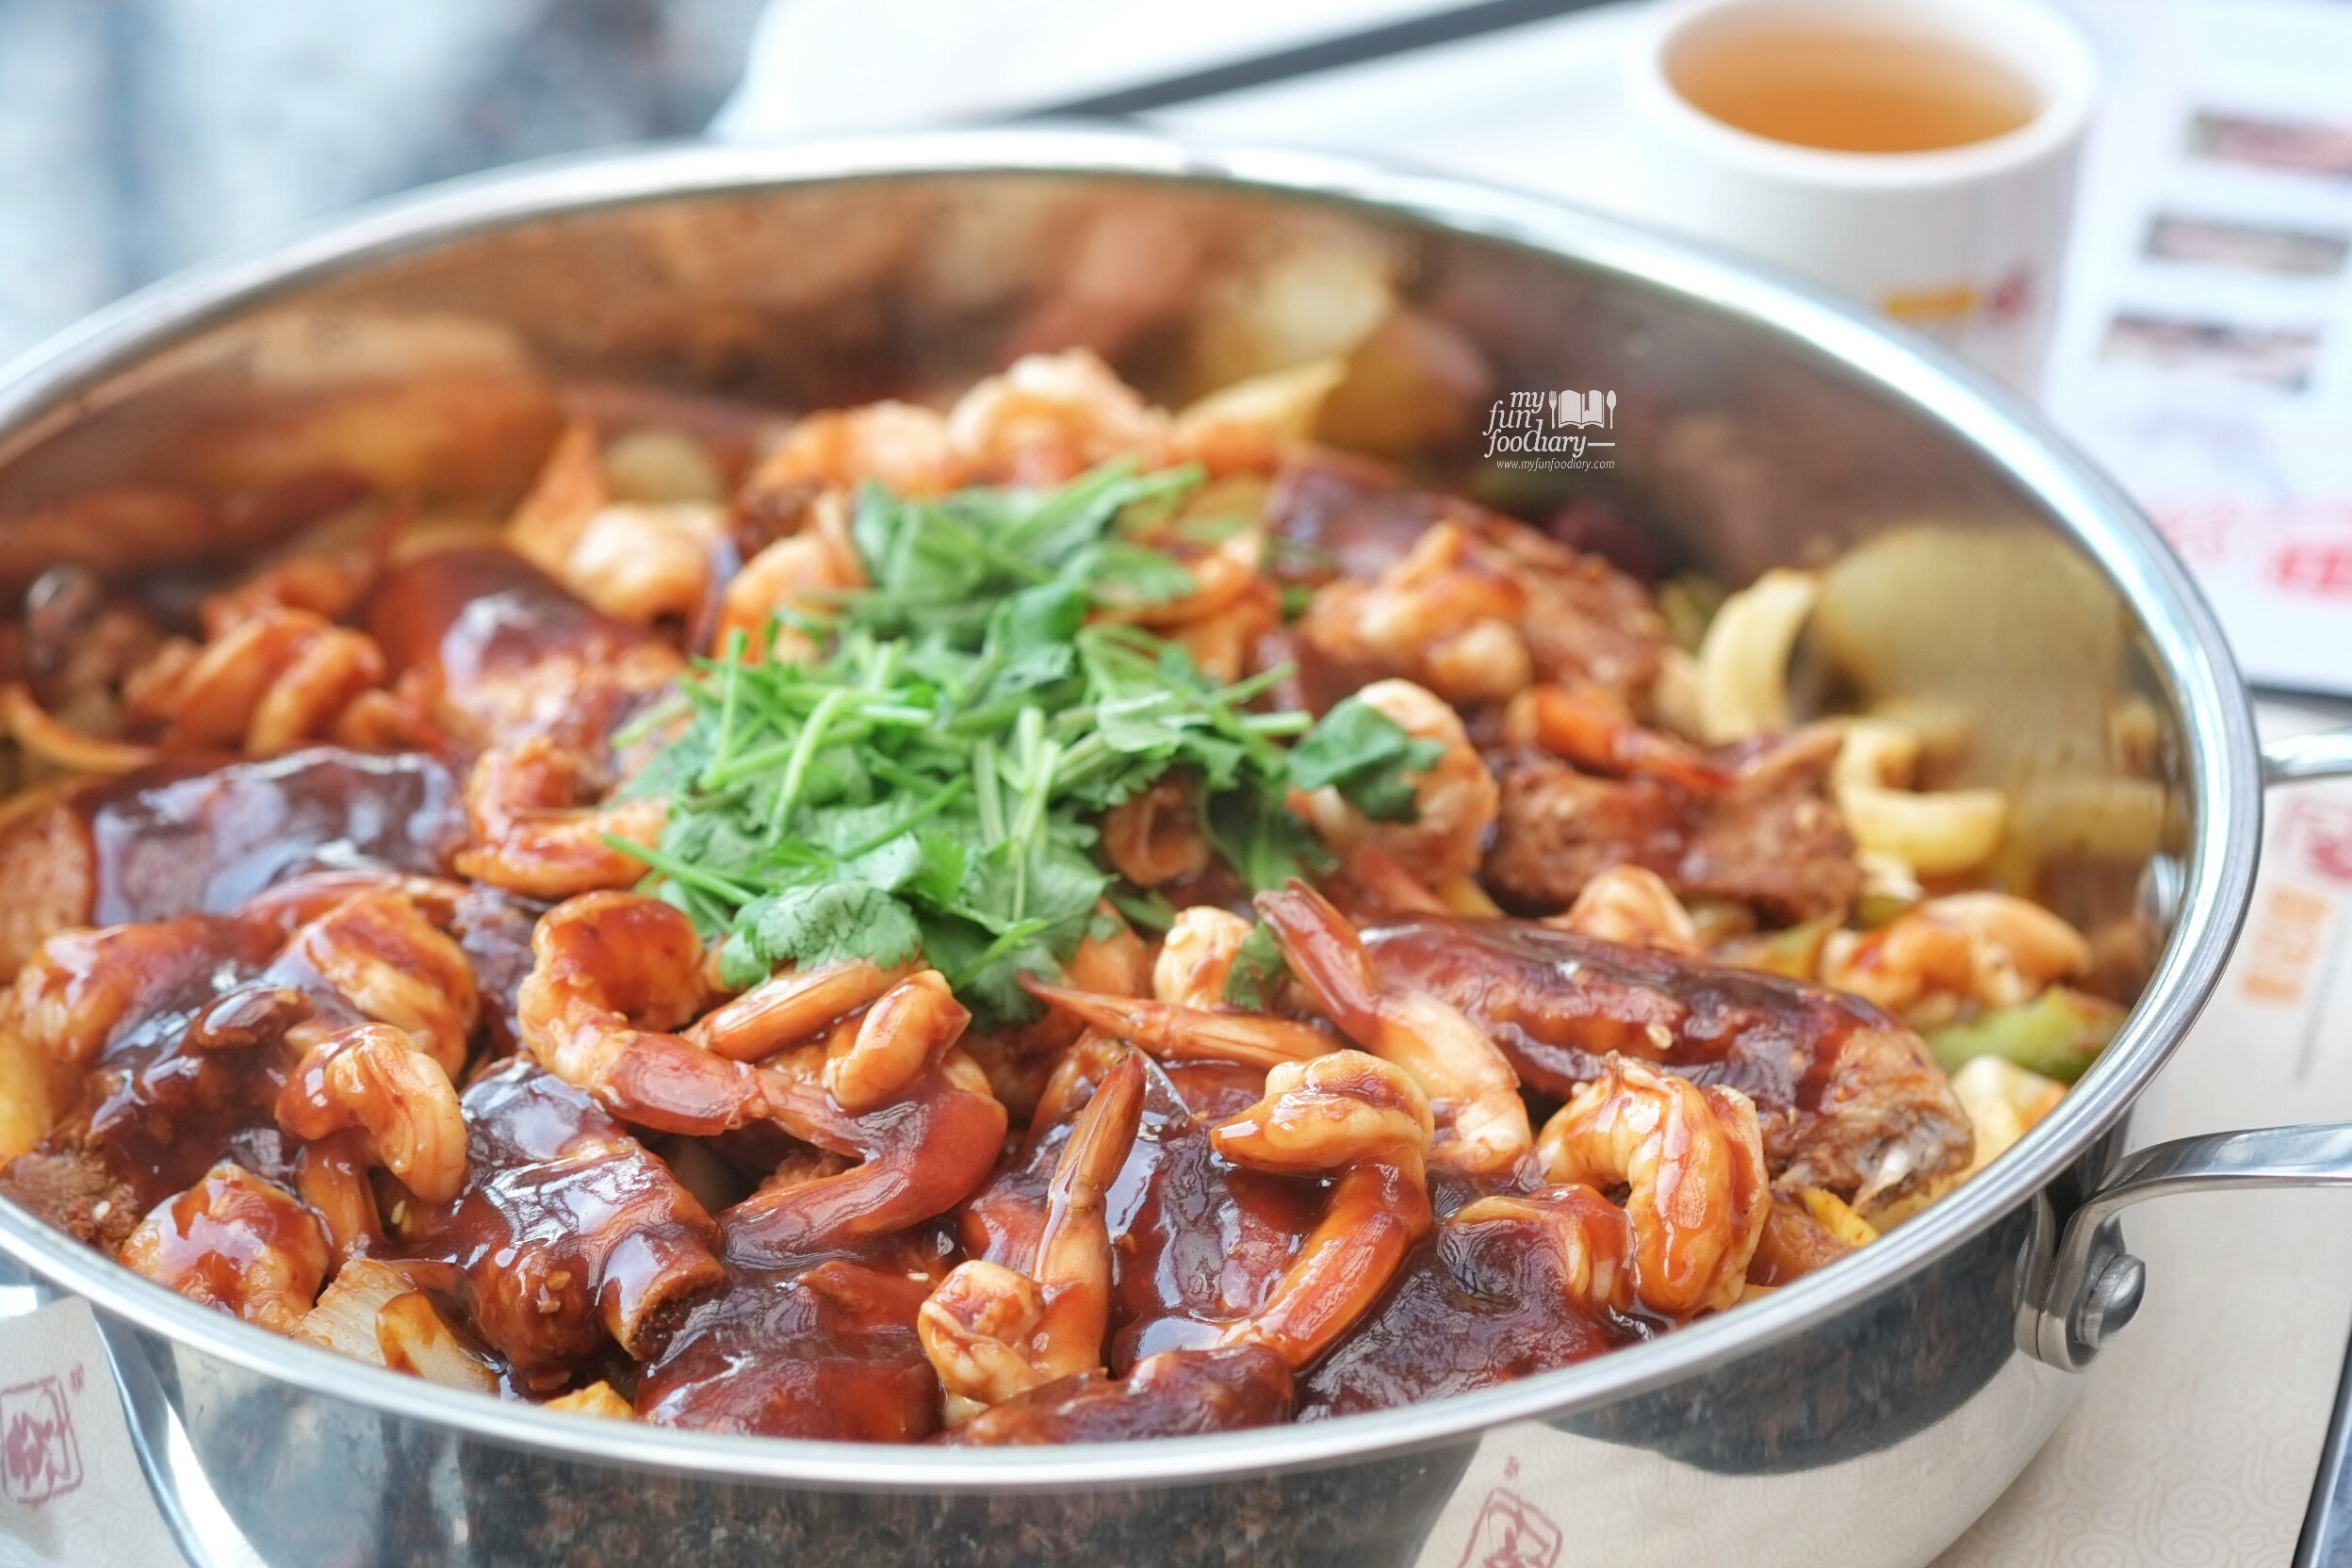 Pork Ribs - Chicken Wings - Shrimps at Huang Ji Huang PIK by Myfunfoodiary